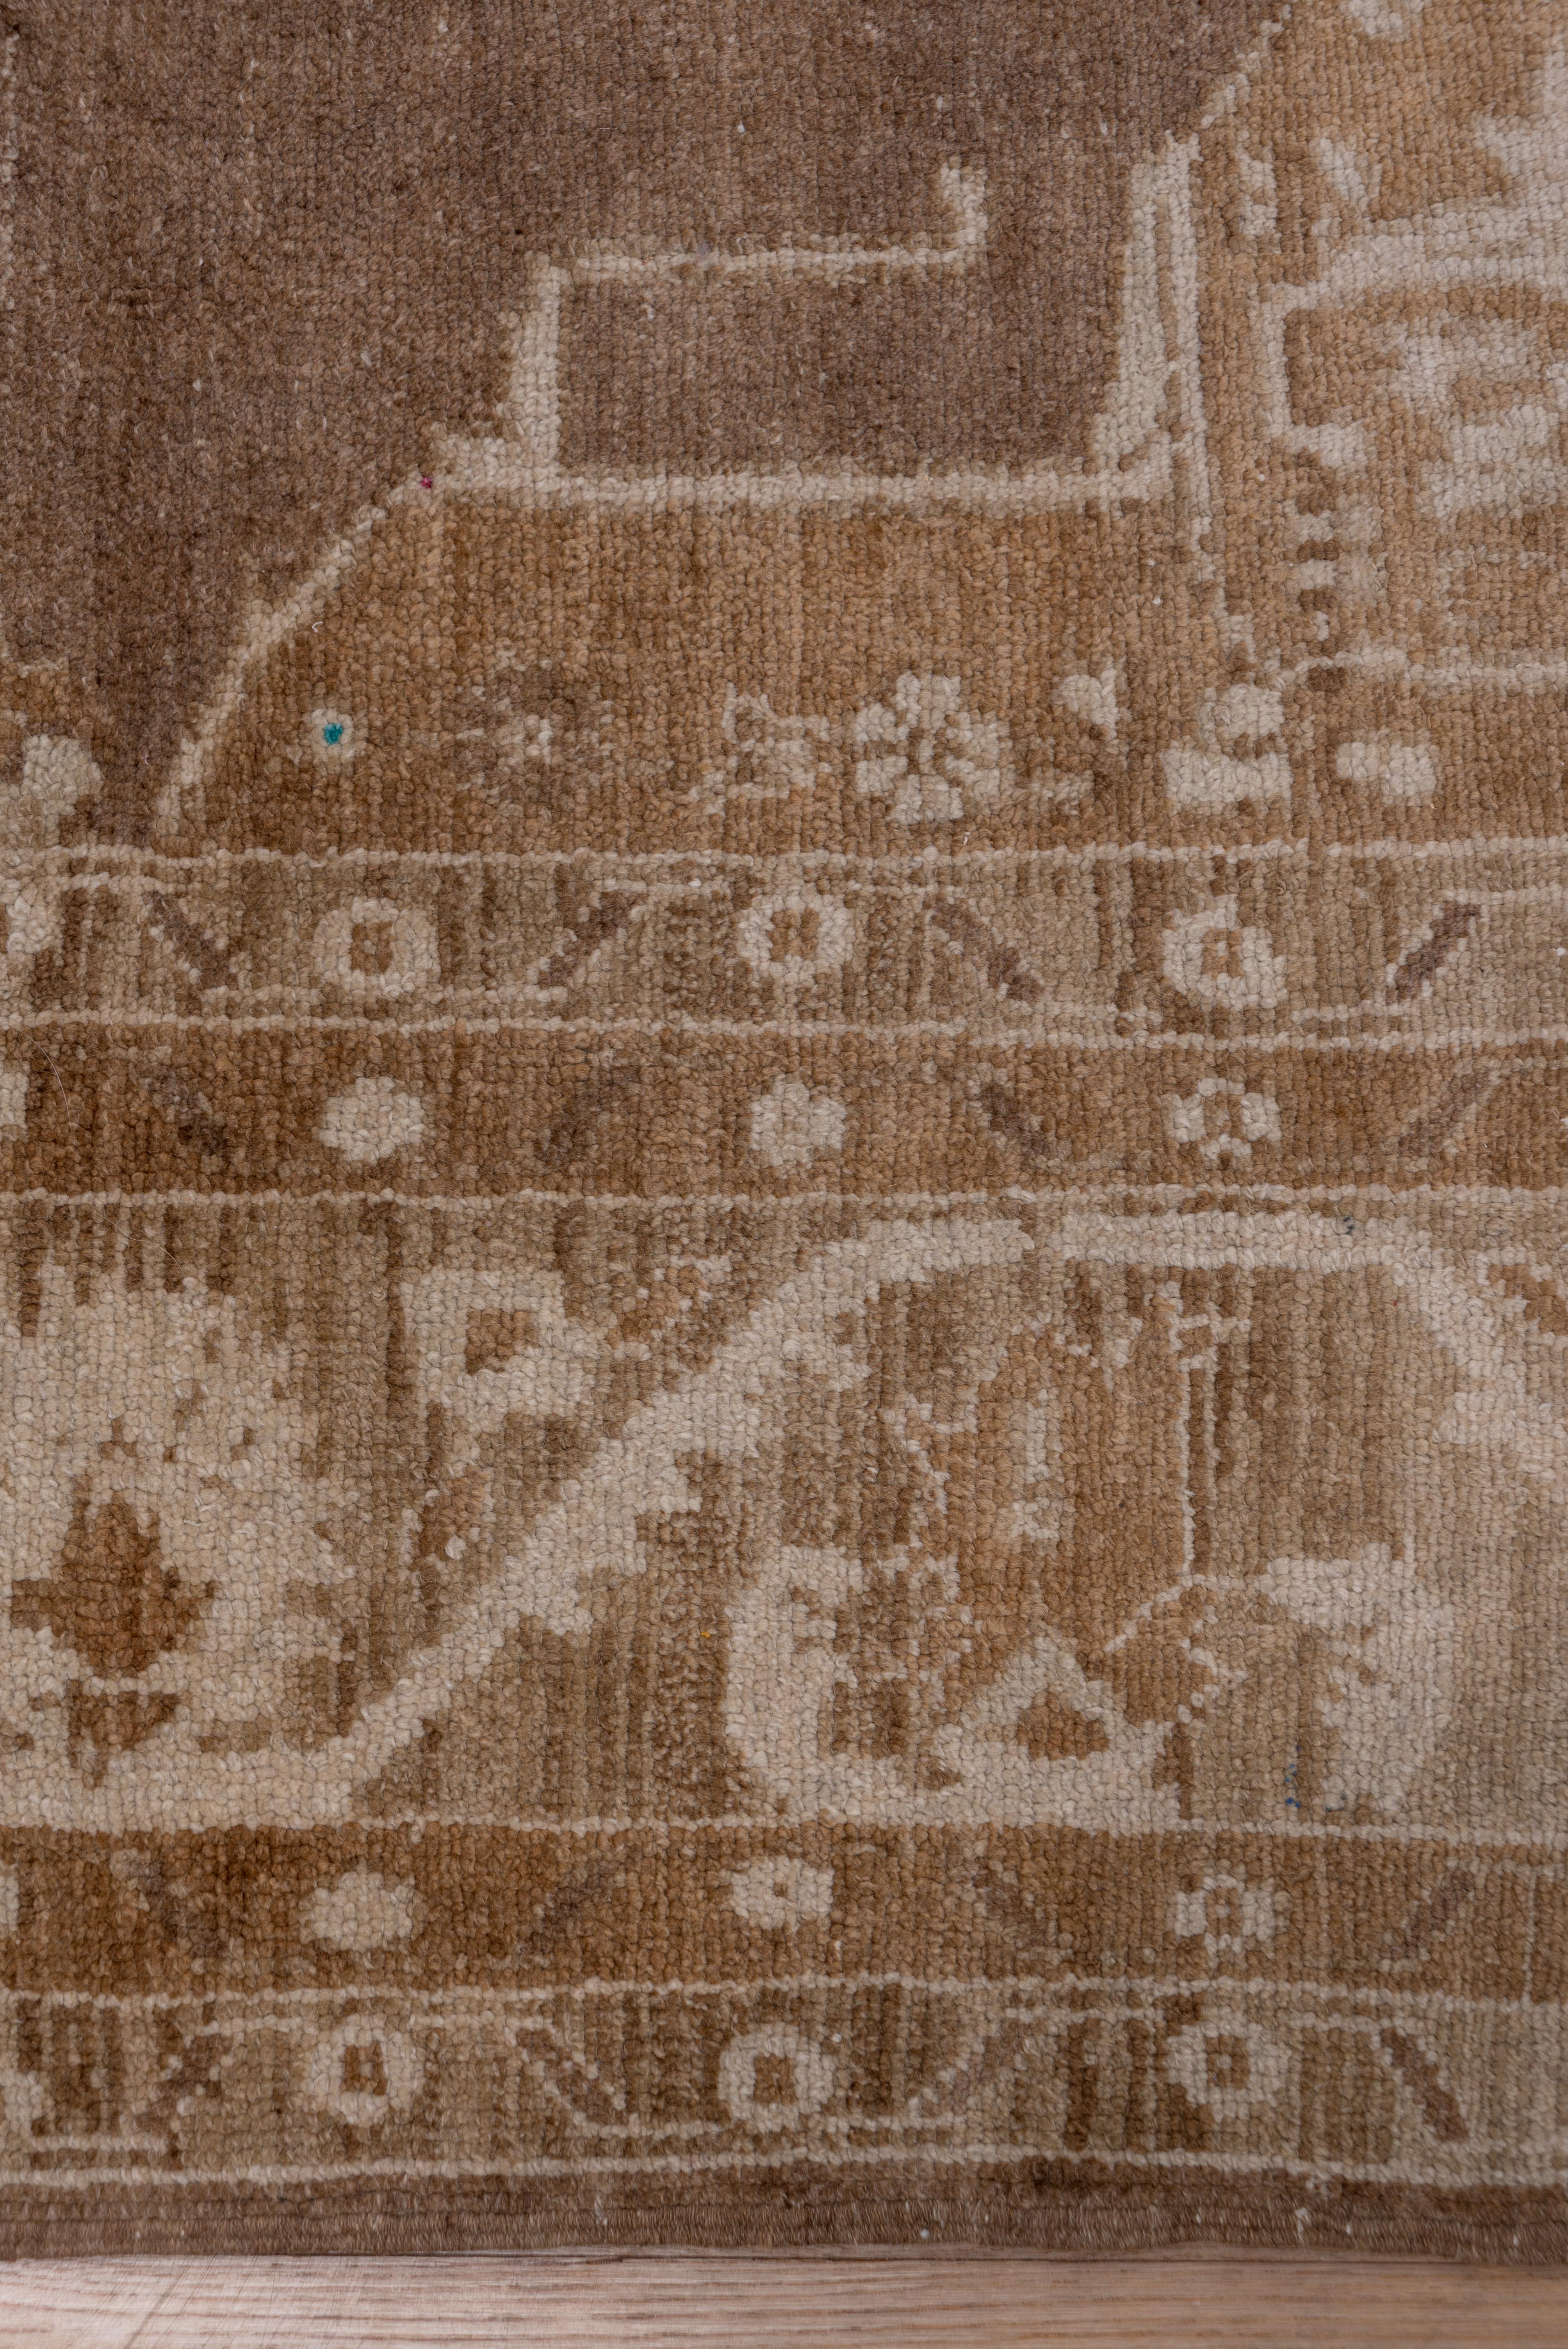 Antique Turkish Oushak Carpet, Brown Field, Light Brown Borders, Circa 1930s For Sale 4